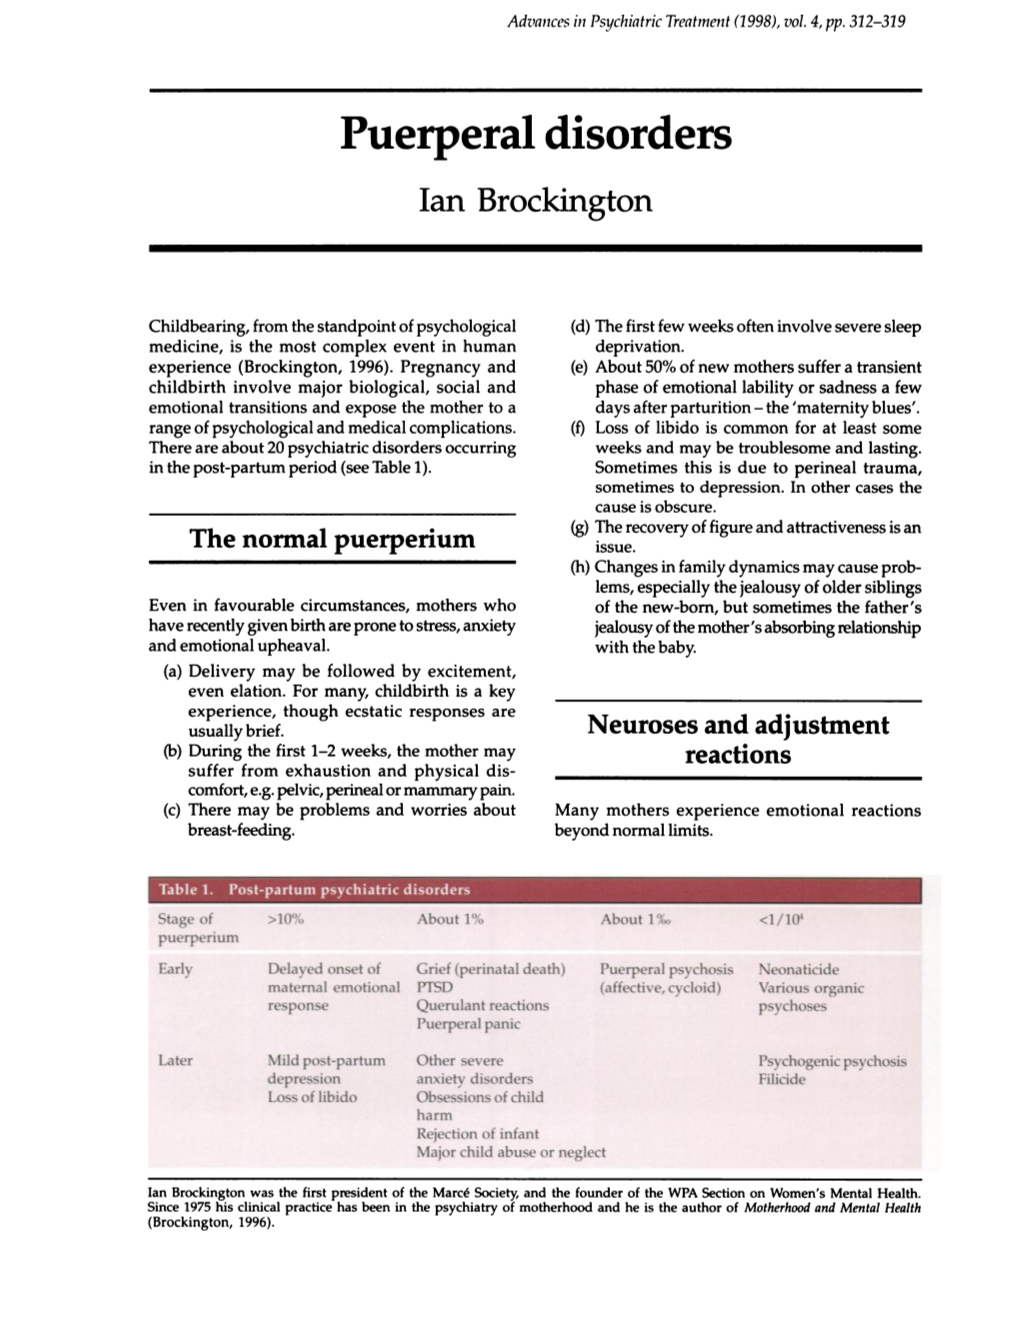 Puerperal Disorders Ian Brockington